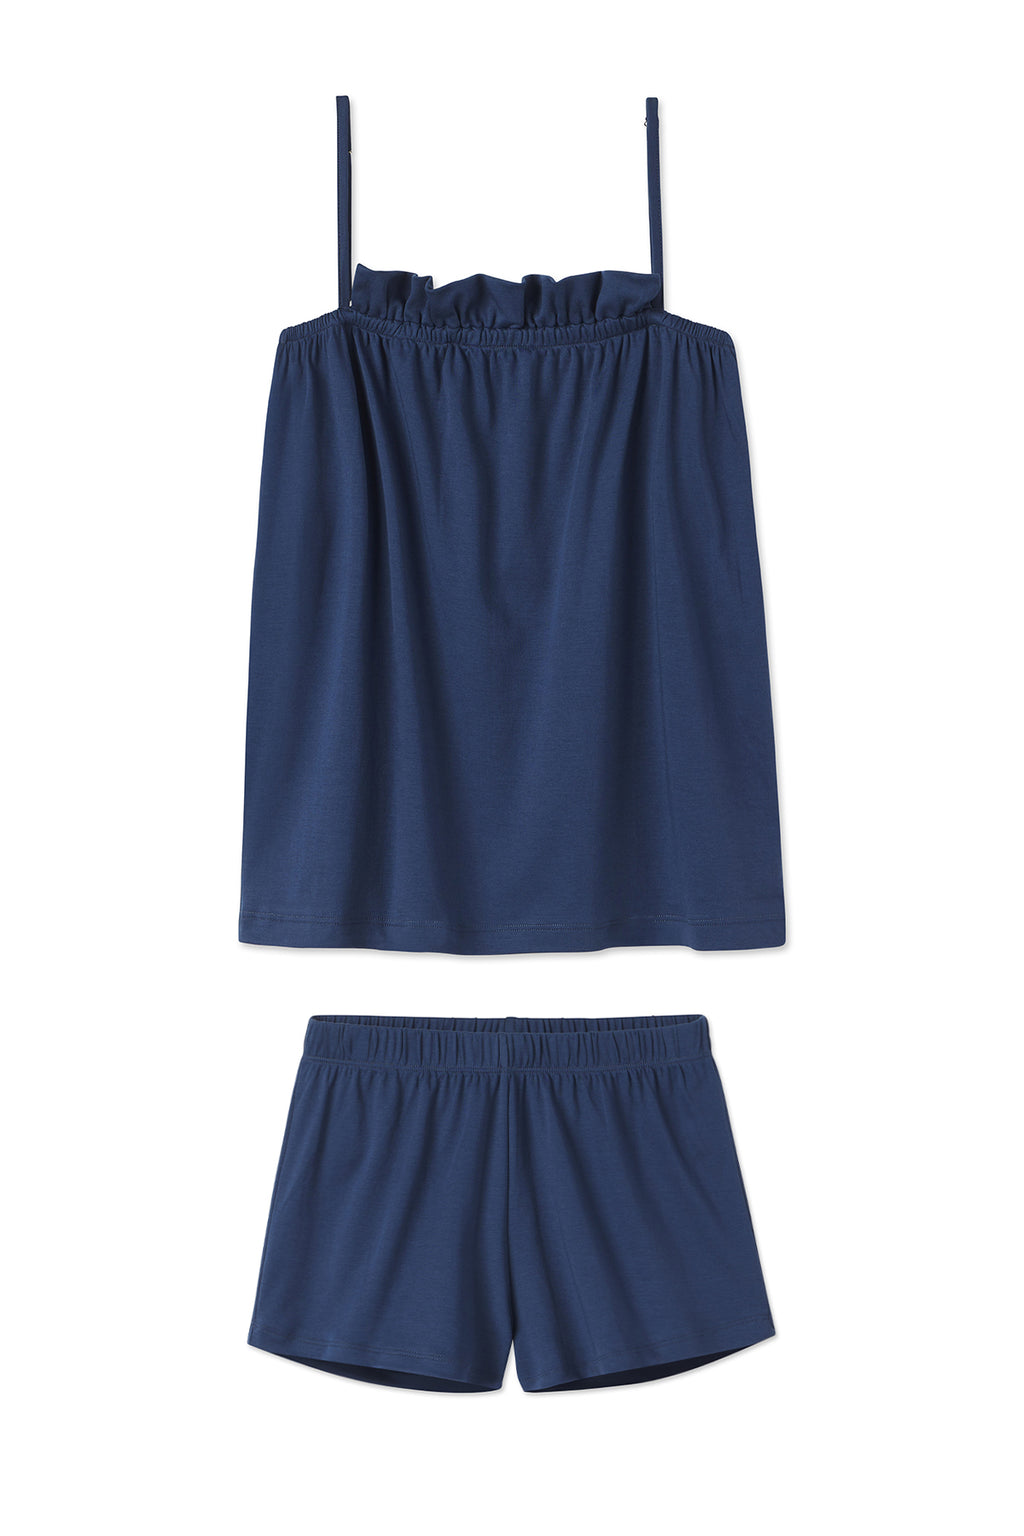 LAKE | Women | Pima Cotton Pajamas | Navy Ruffle Shorts Set